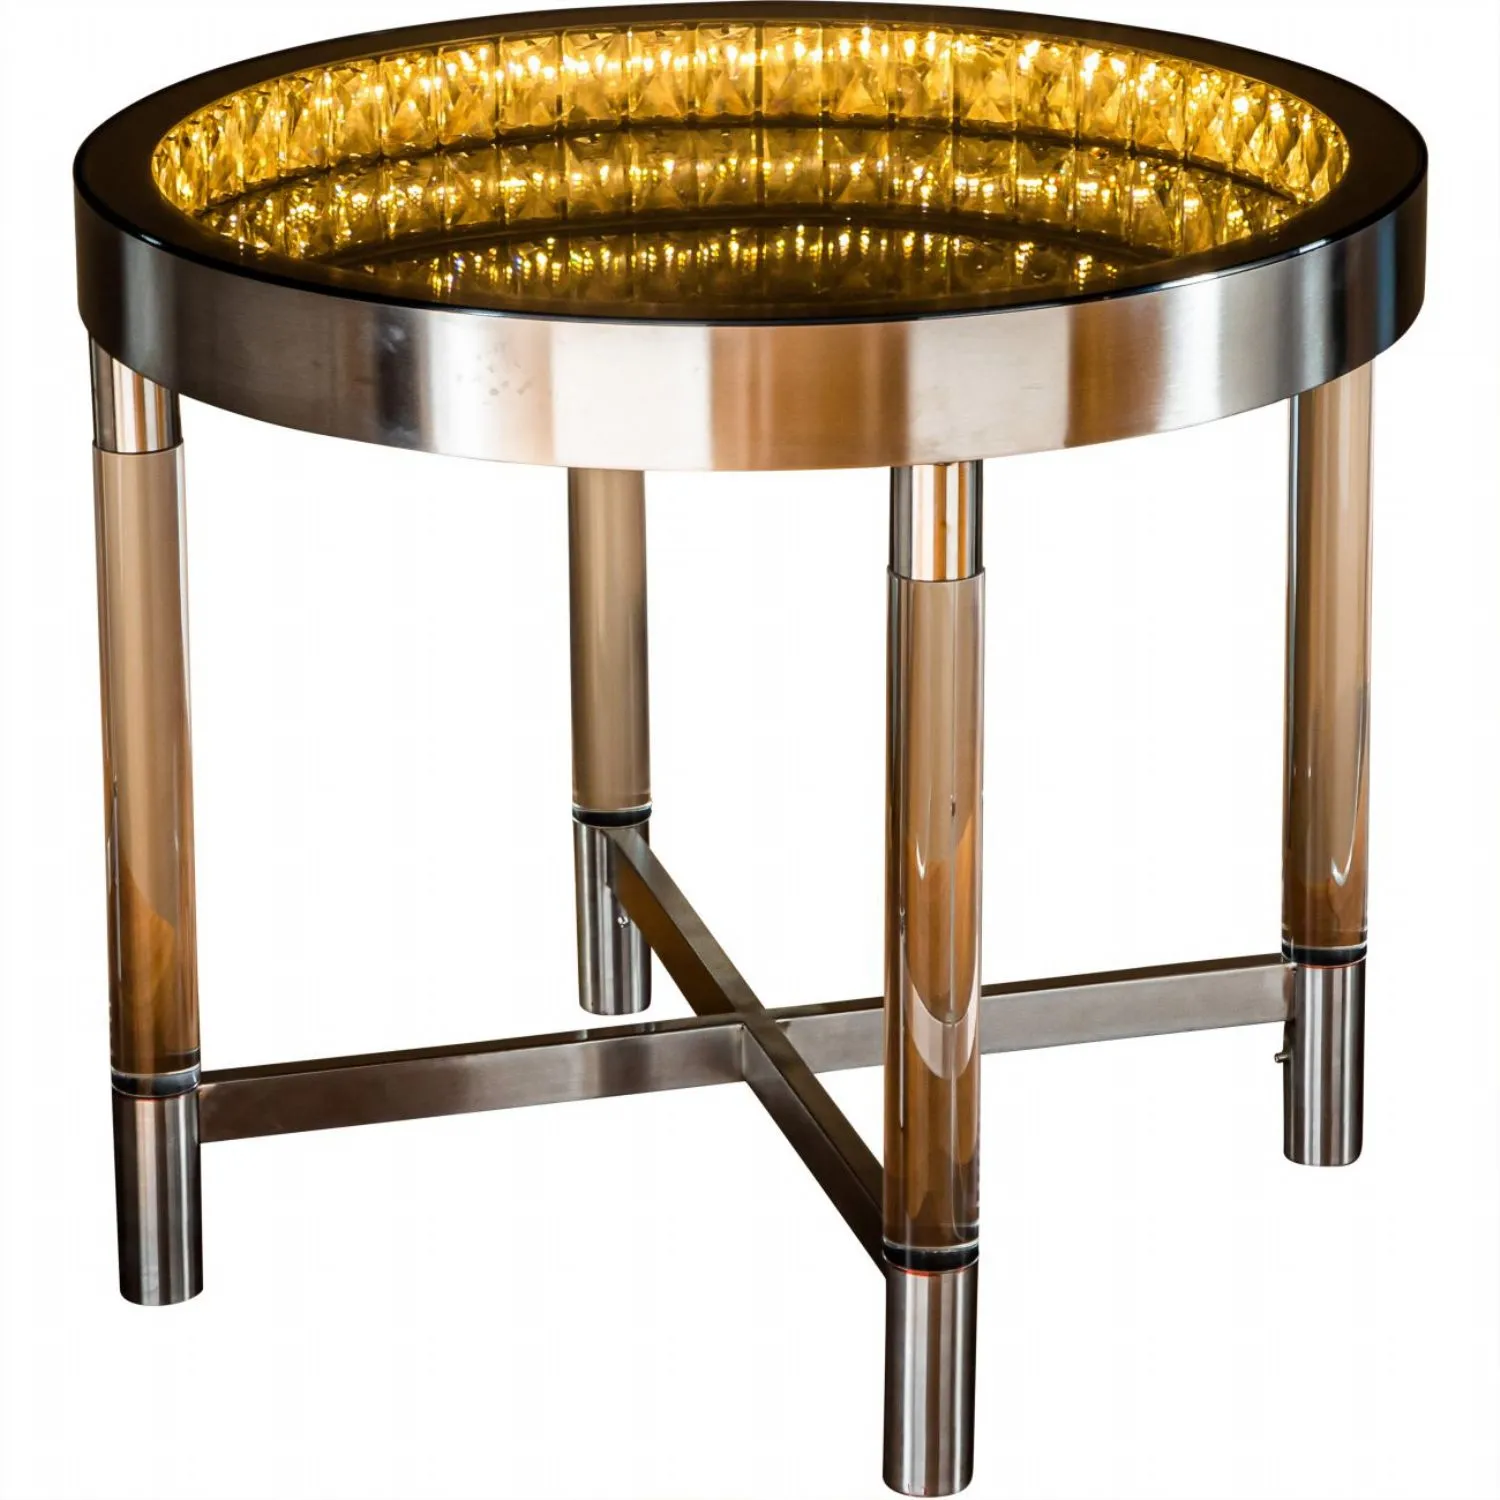 Davenport LED Illuminated Side Table 60cm